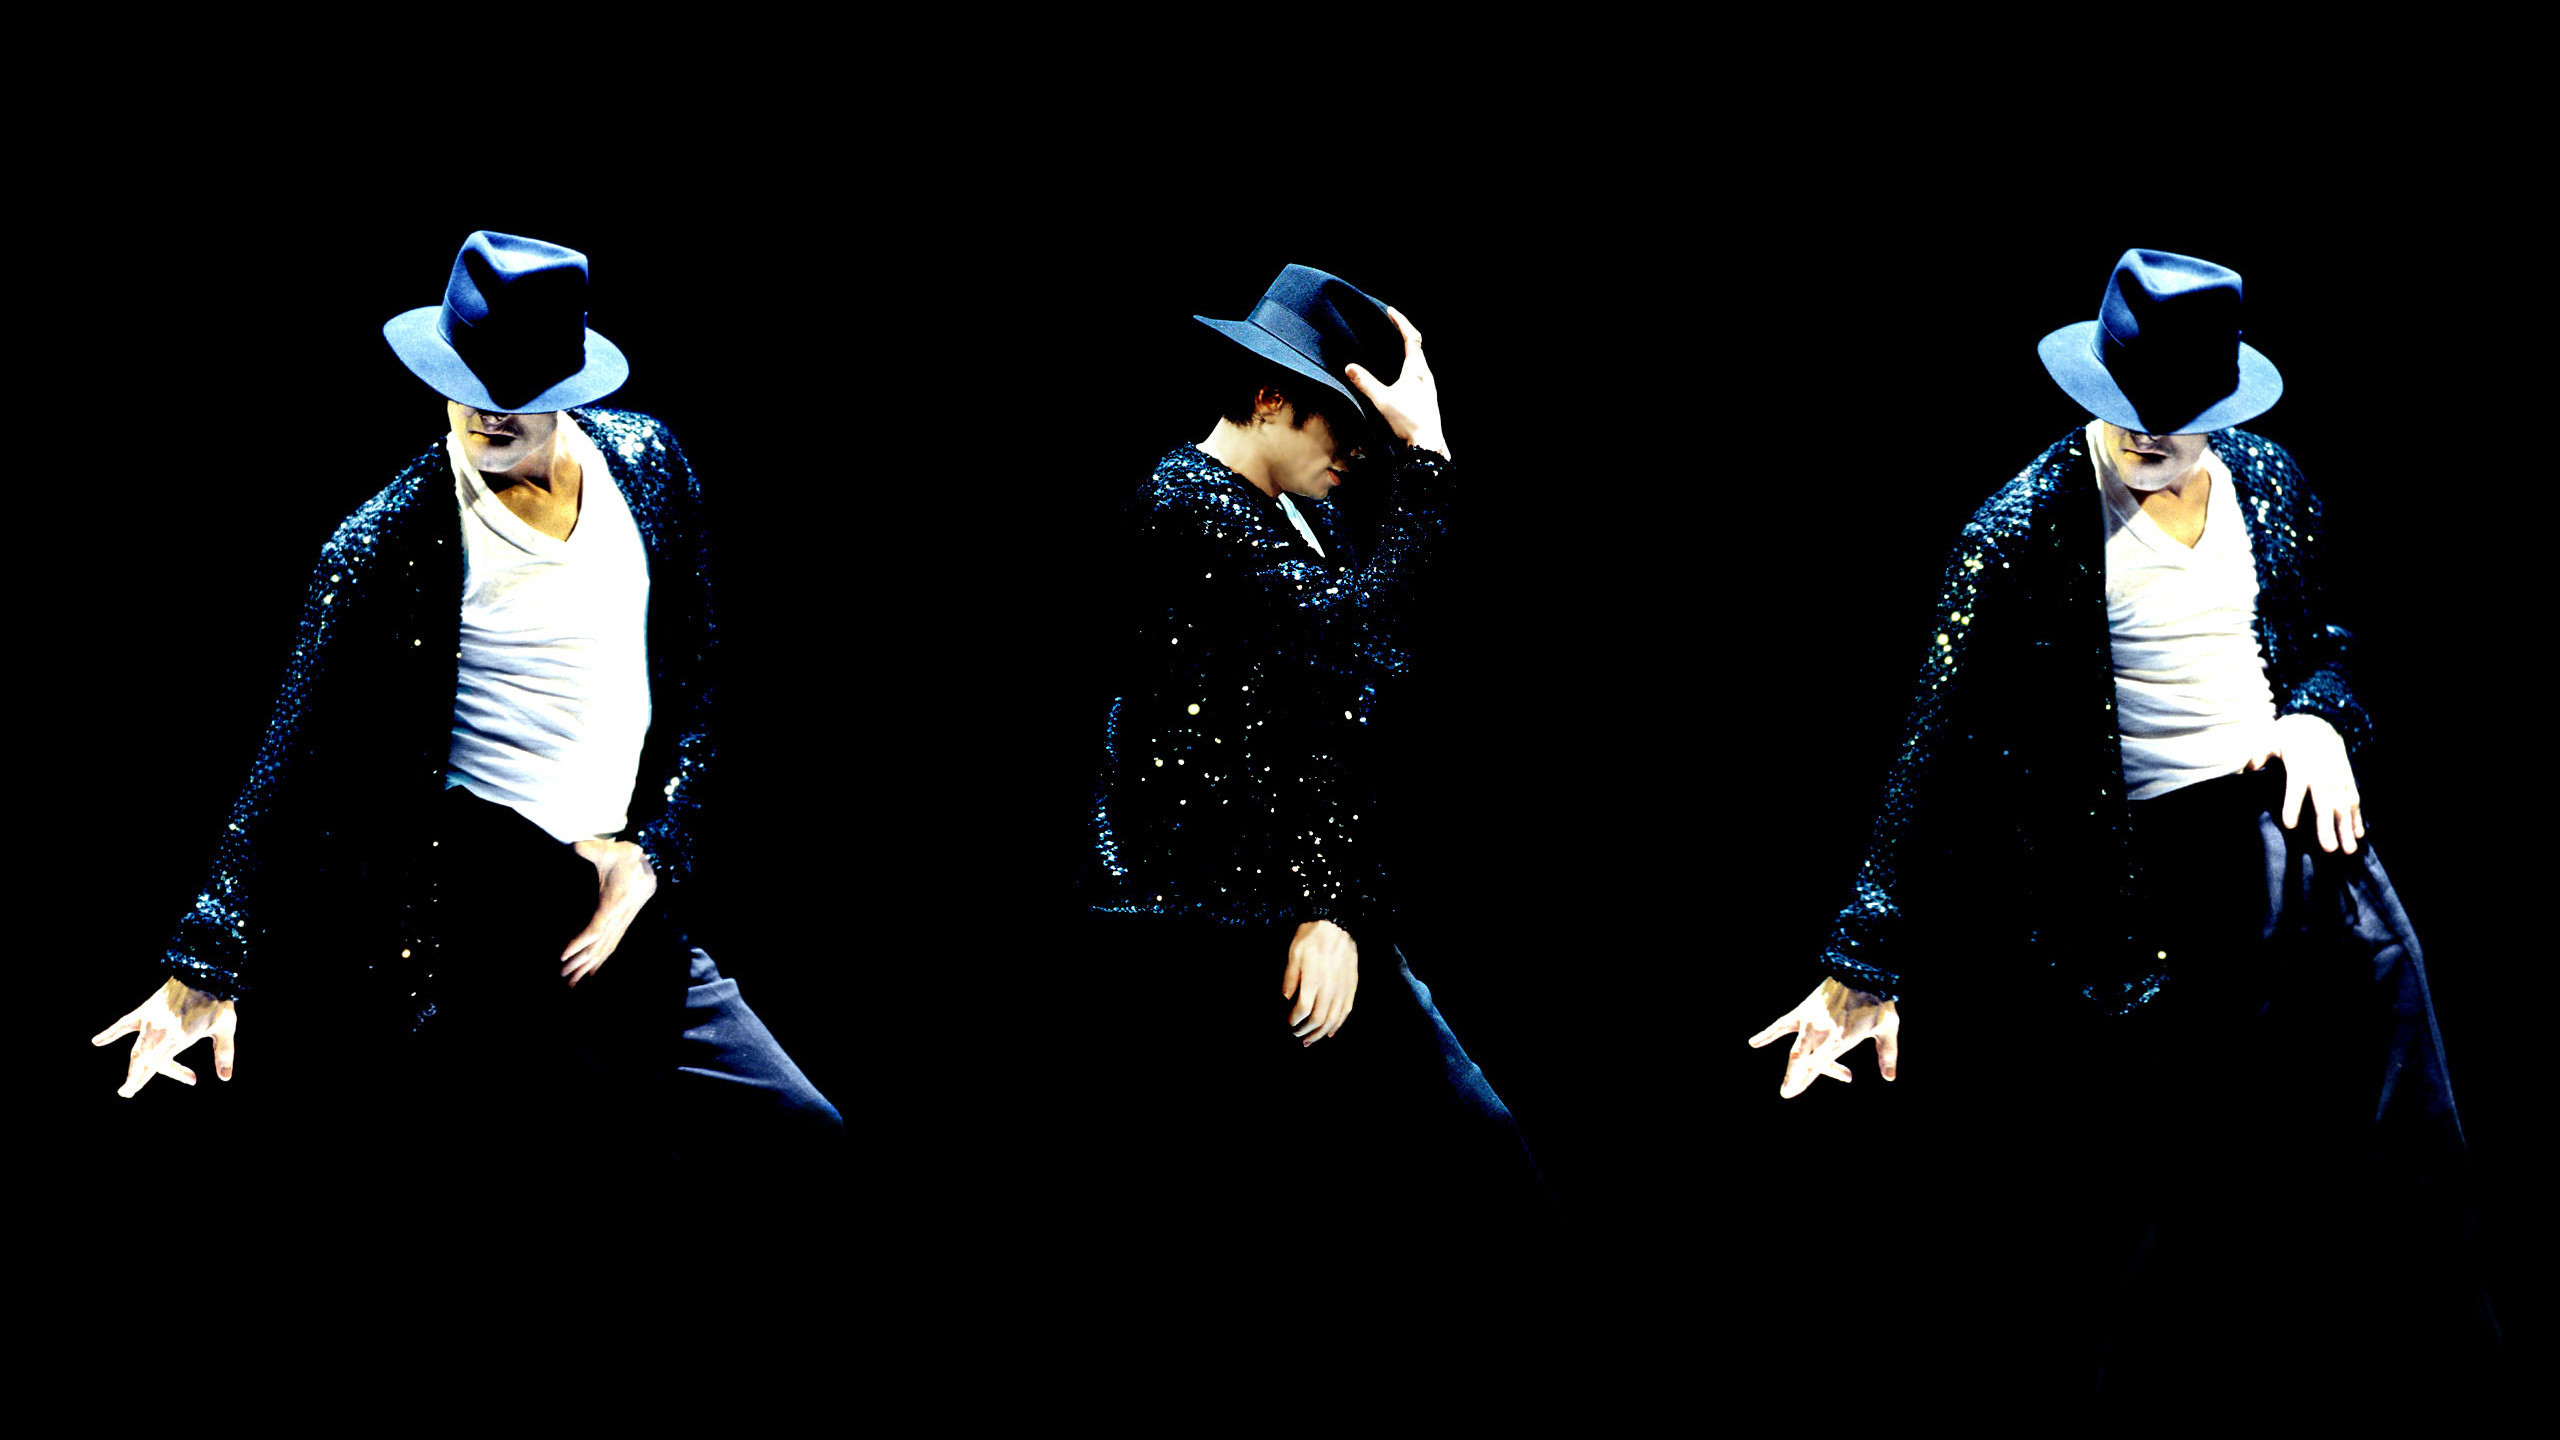 2560x1440 Music - Michael Jackson Music King of Pop Wallpaper